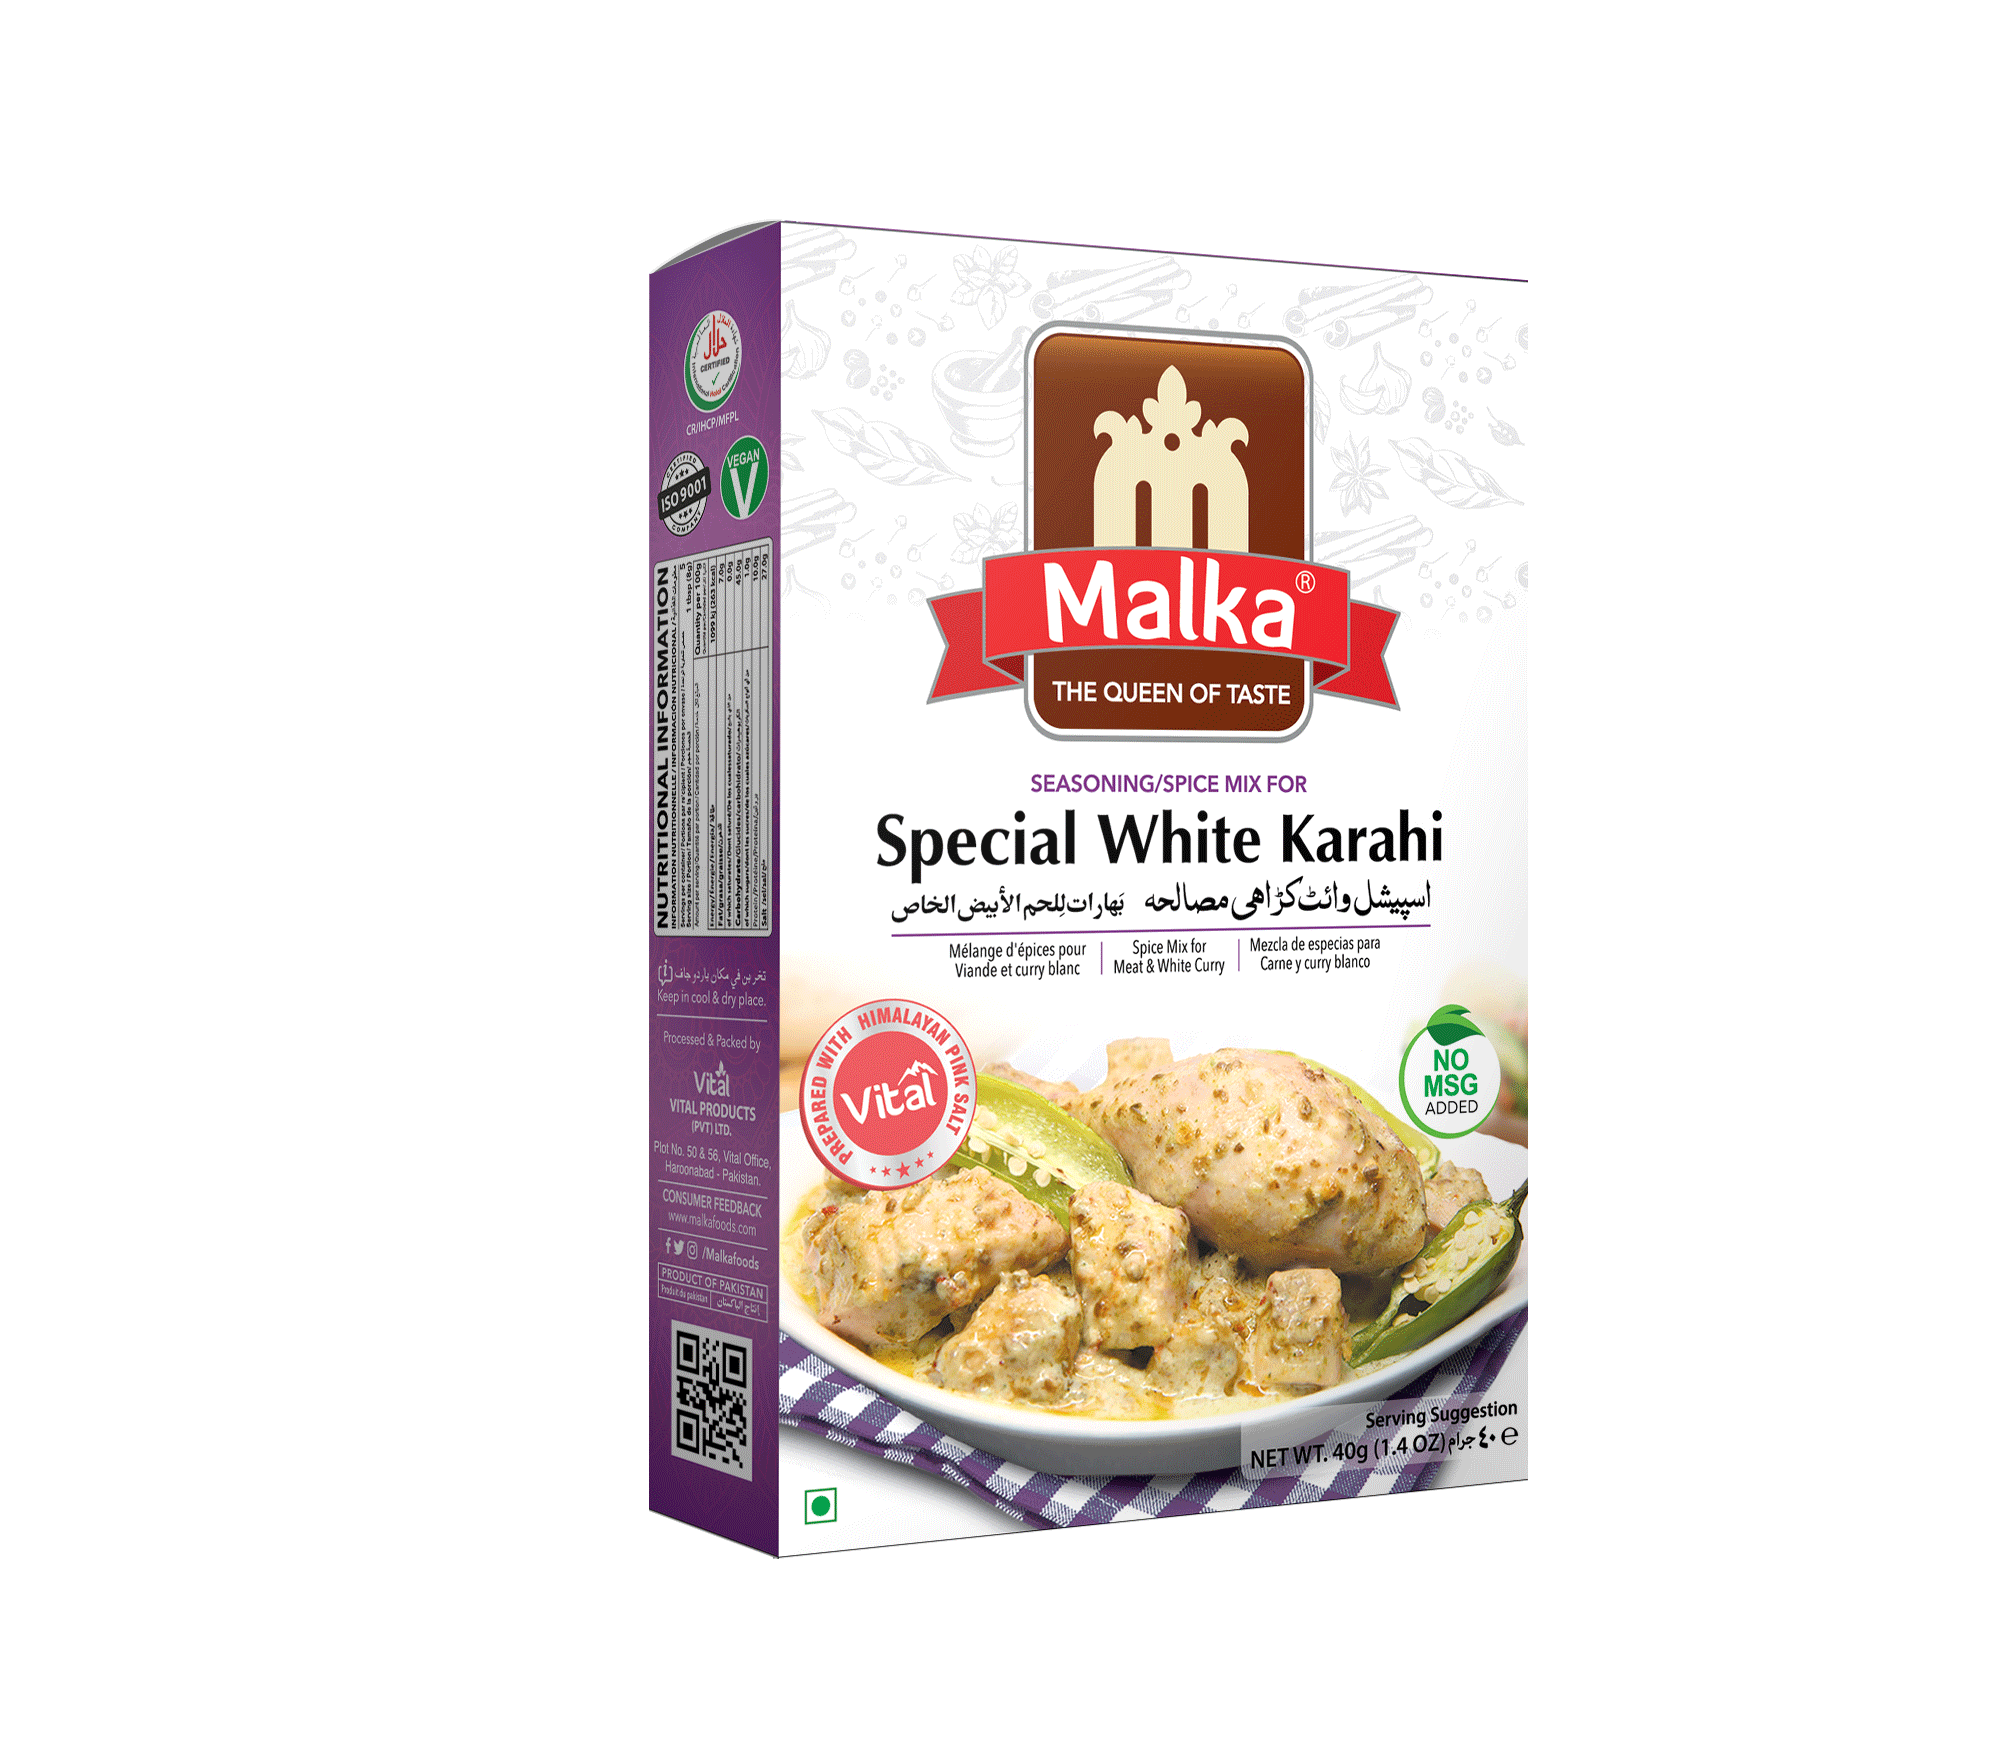 Special White Karahi Masala